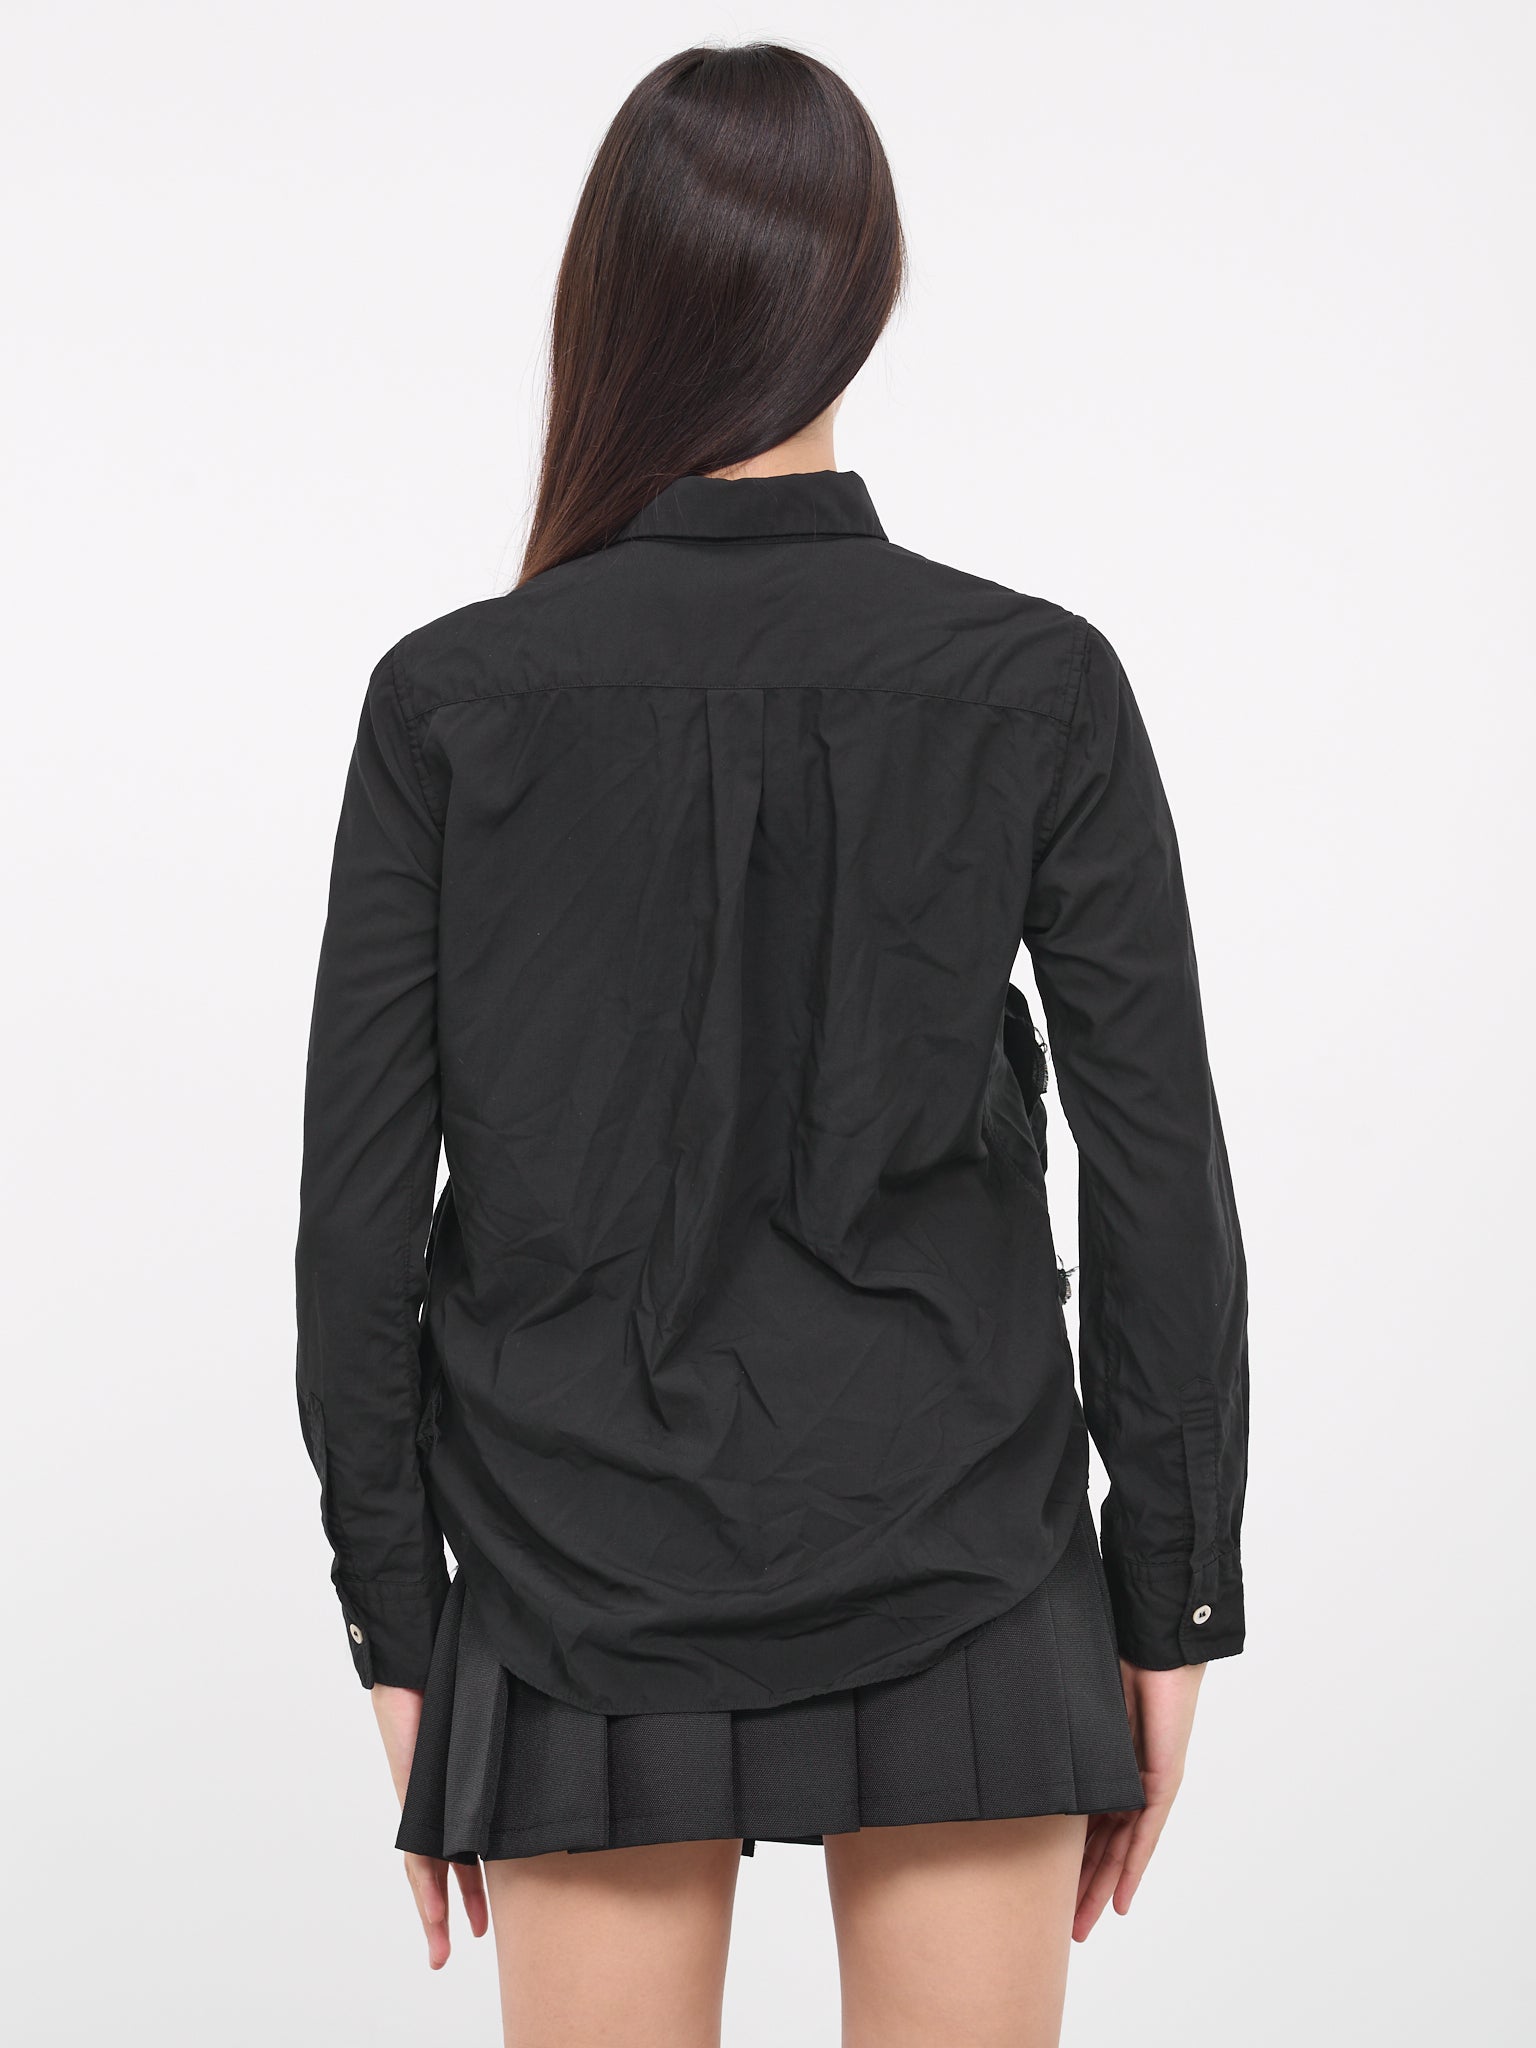 Ruffle Appliqué Shirt (GL-B013-051-BLACK)